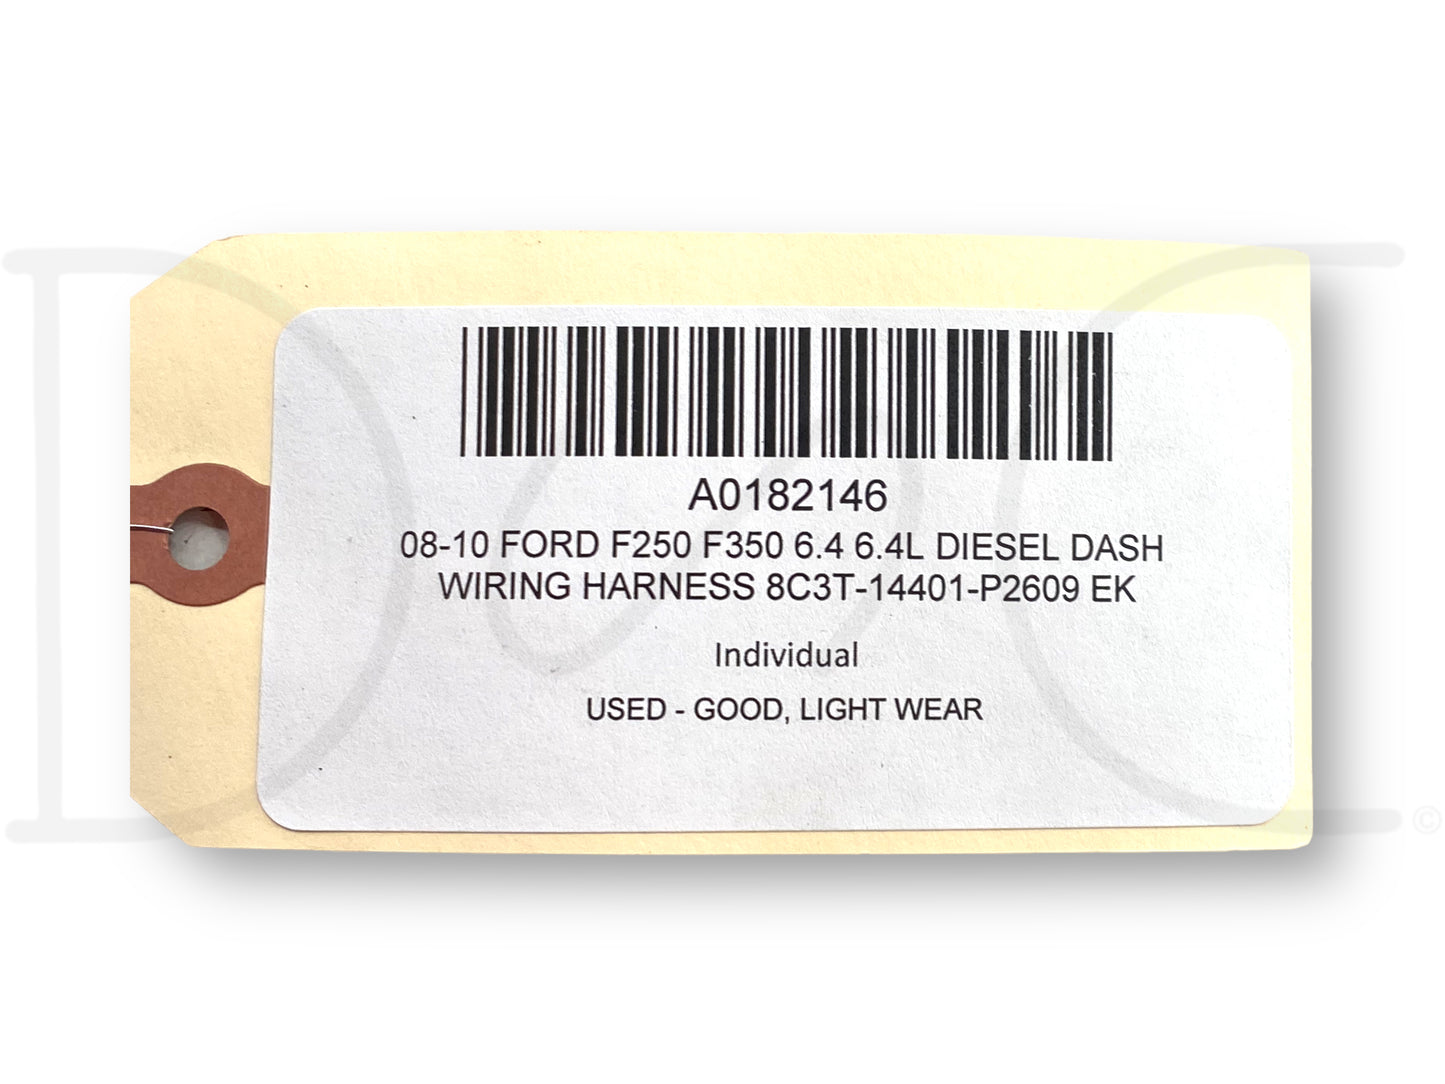 08-10 Ford F250 F350 6.4 6.4L Diesel Dash Wiring Harness 8C3T-14401-P2609 Ek